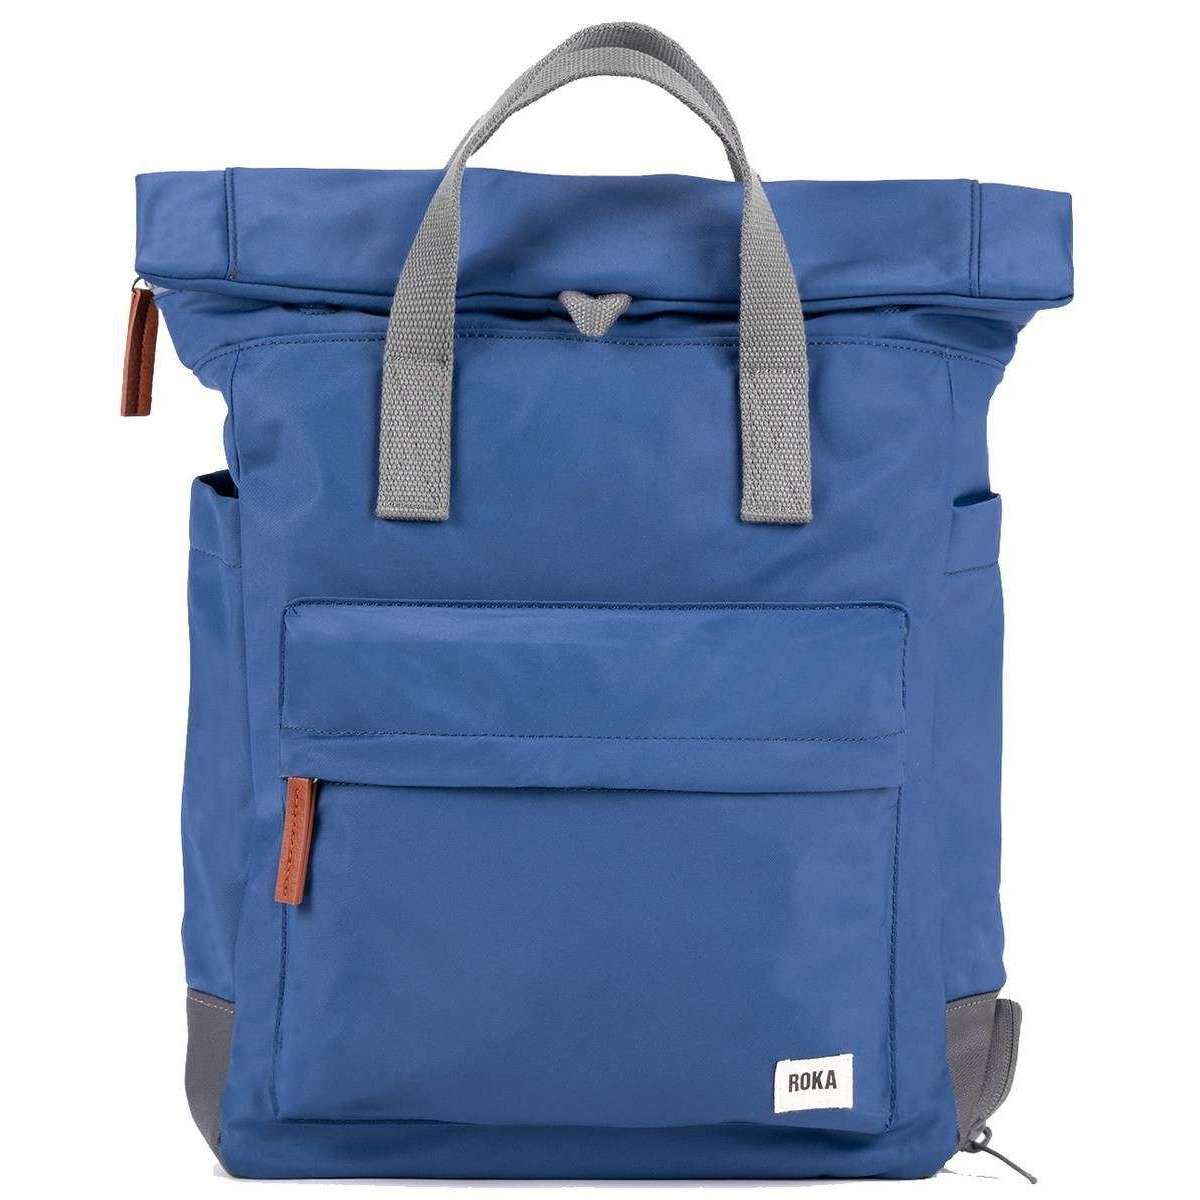 Roka Bayswater B Medium Sustainable Nylon Backpack - Burnt Blue